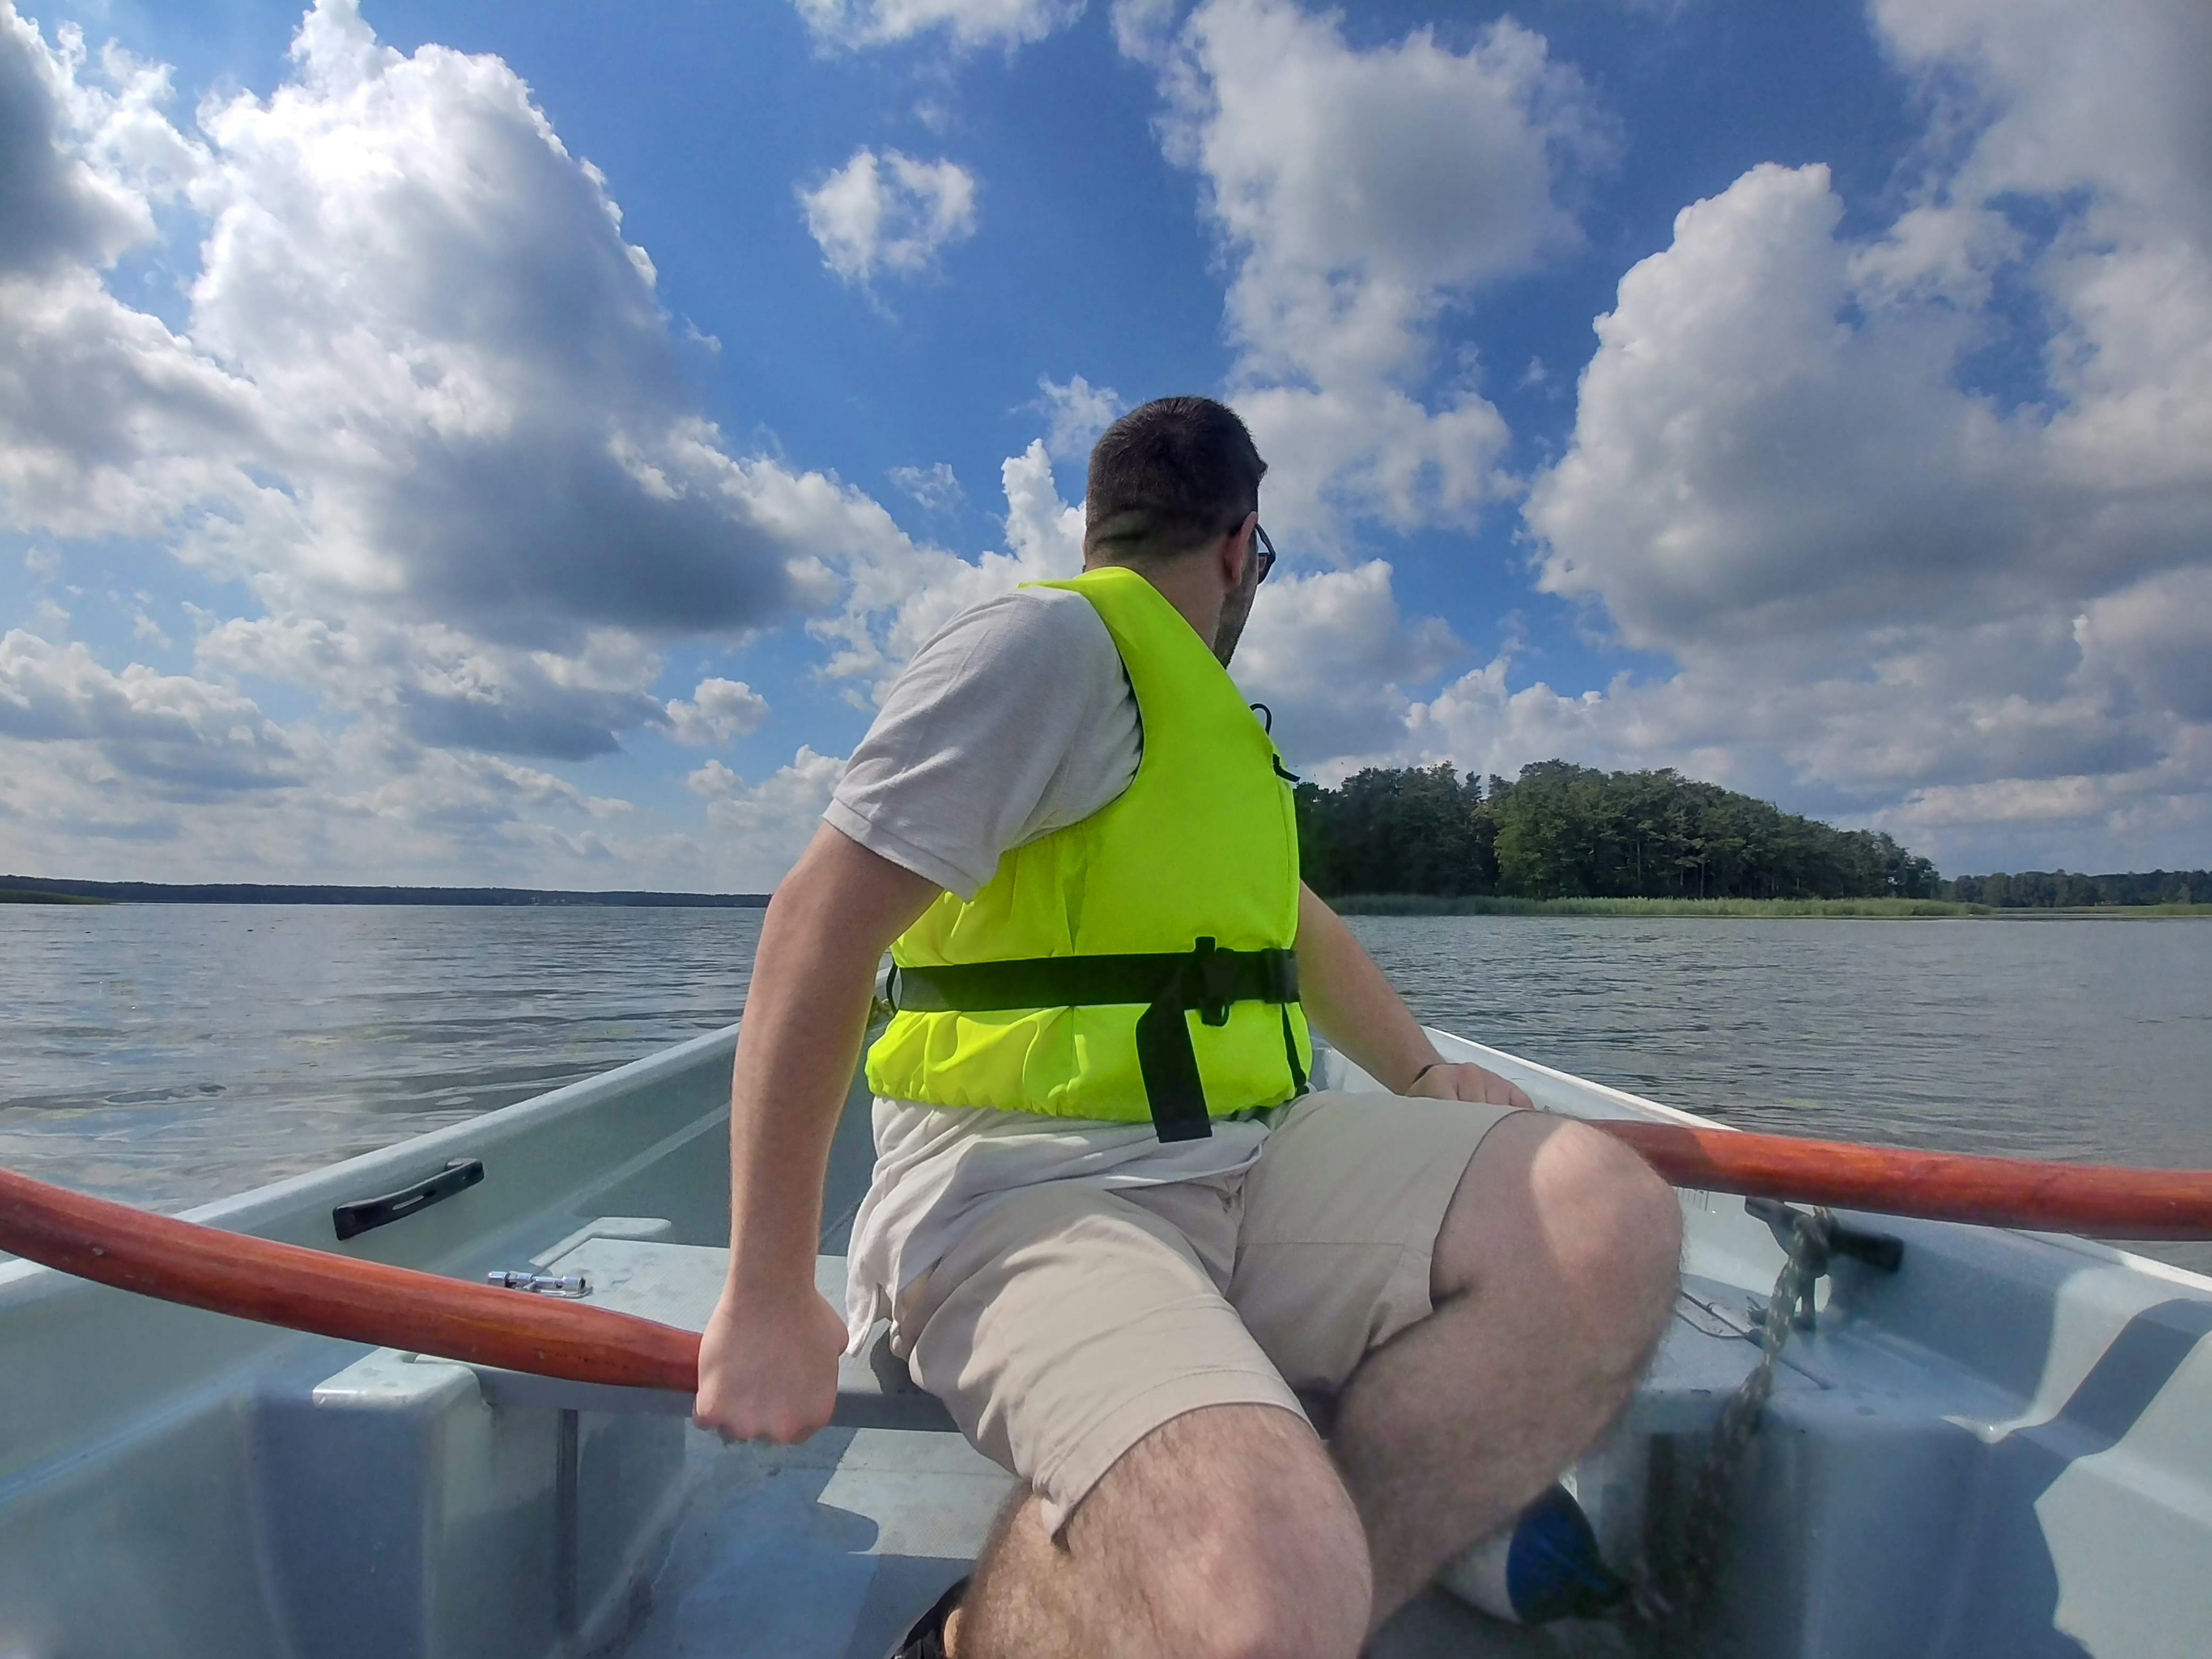 man in green shirt sitting on boat during daytime